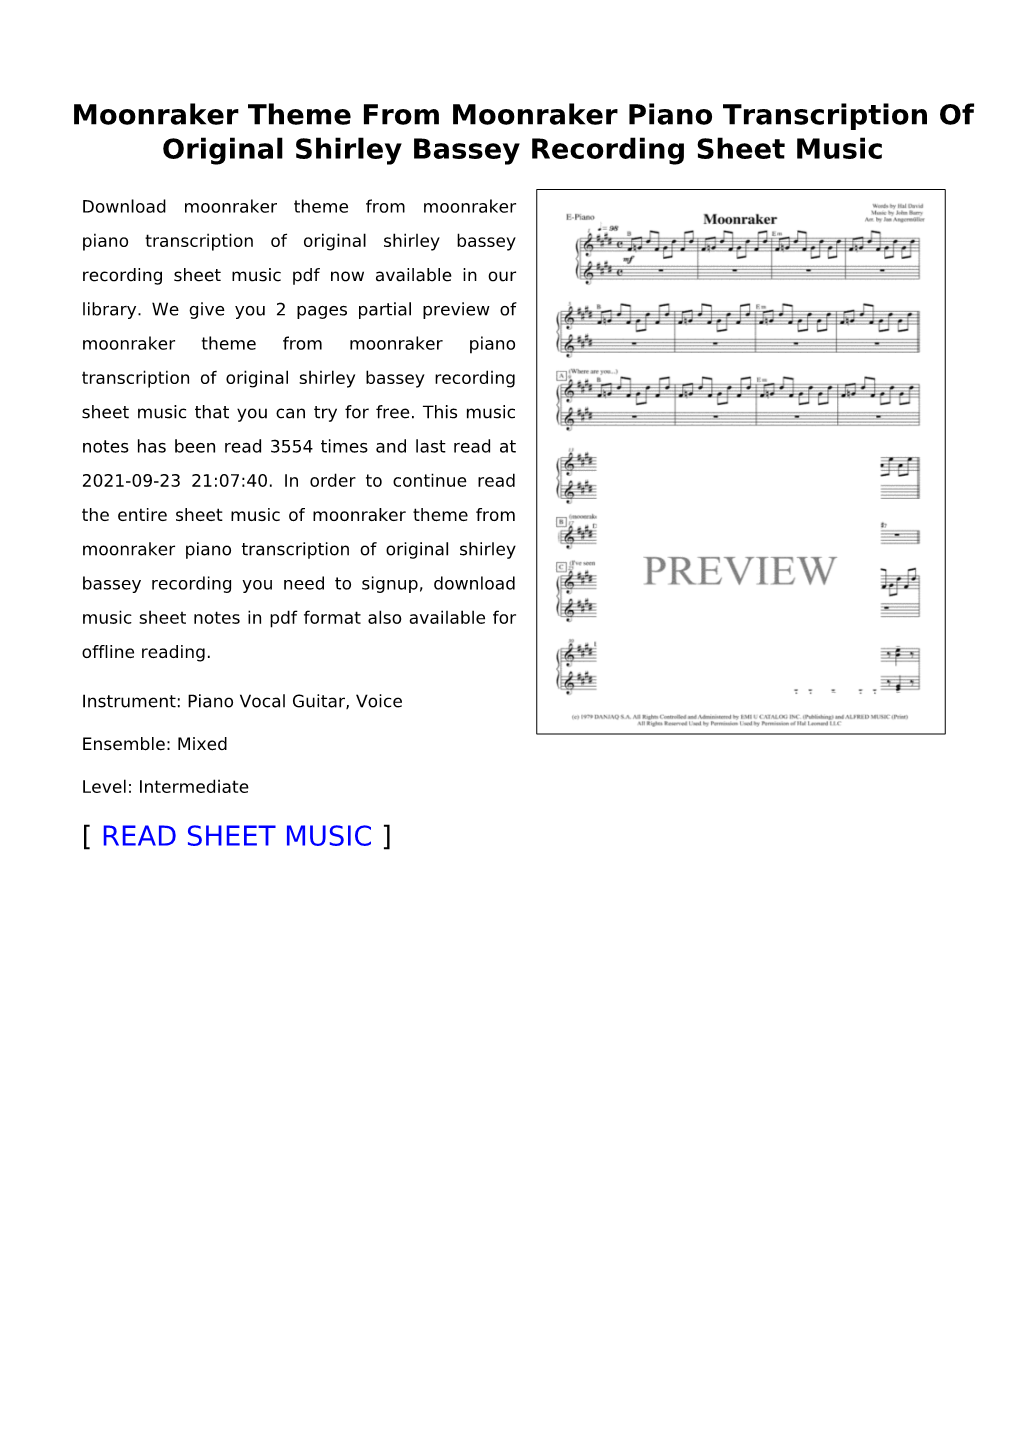 Moonraker Theme from Moonraker Piano Transcription of Original Shirley Bassey Recording Sheet Music